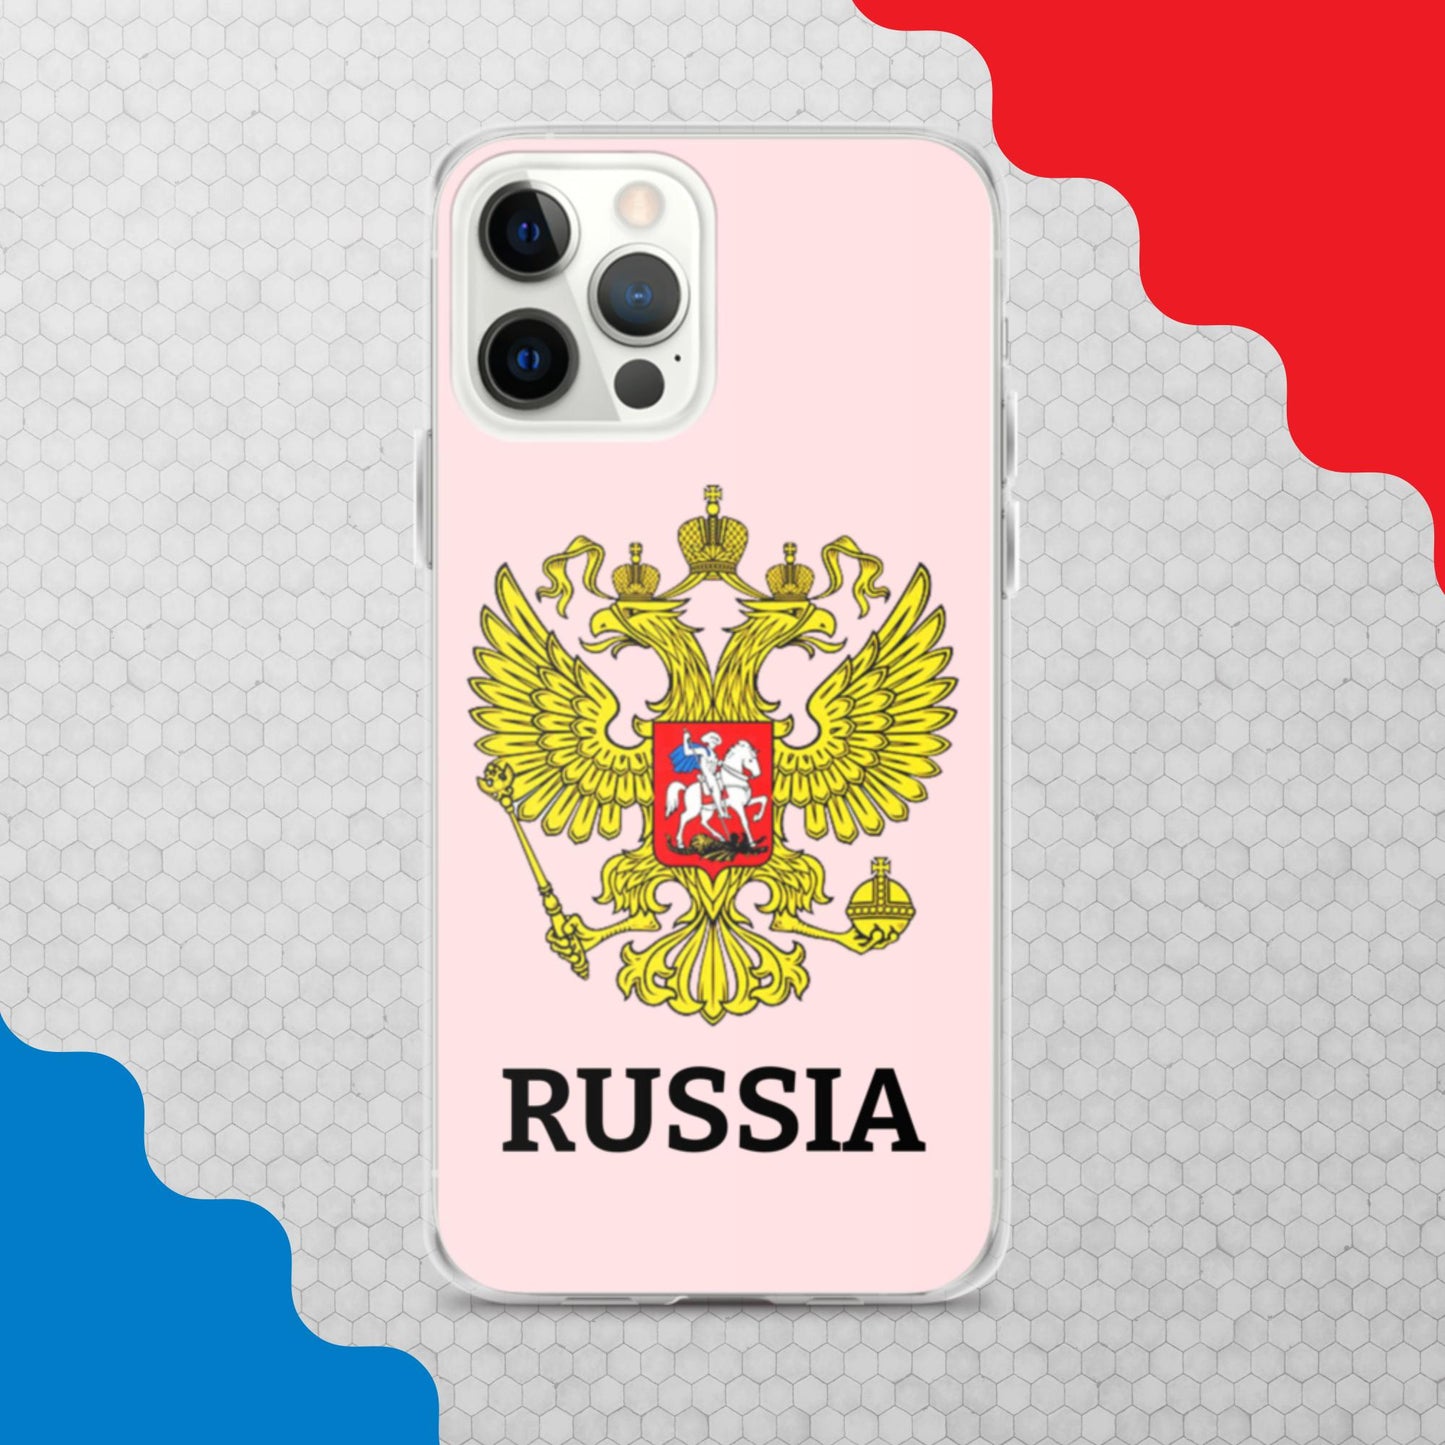 iPhone-Hülle mit Russland-Wappen in rosa (alle Modelle)